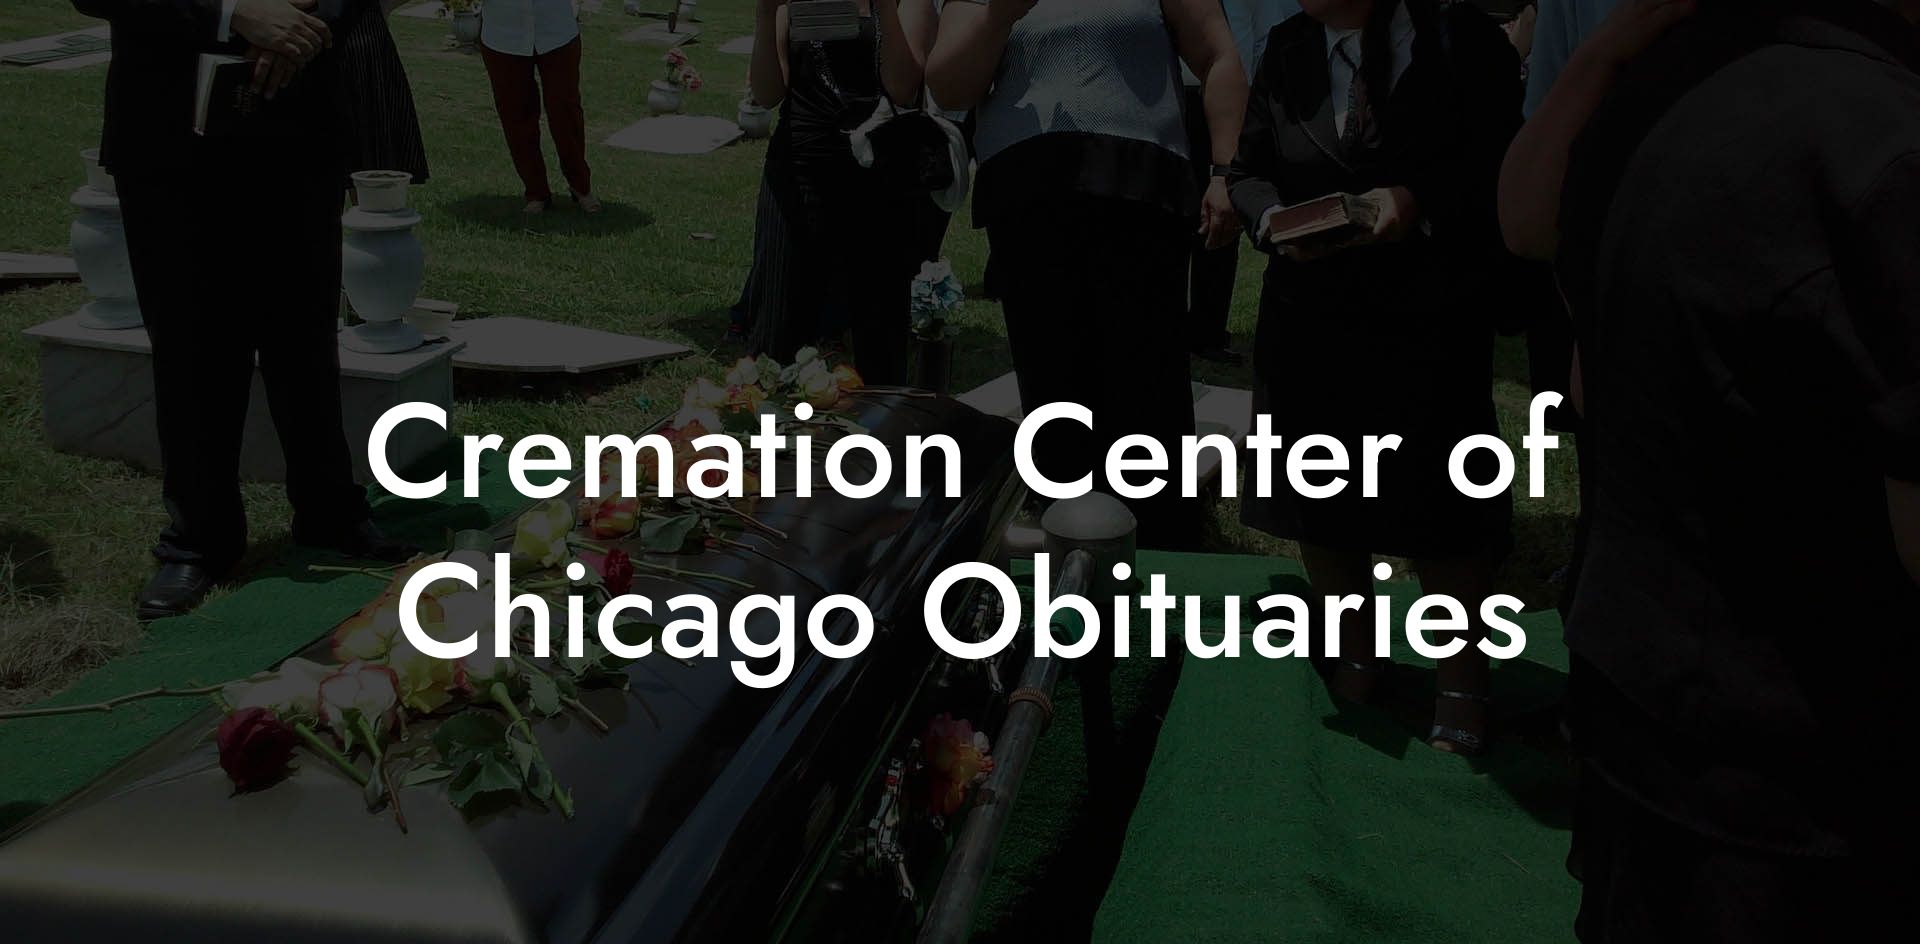 Cremation Center of Chicago Obituaries